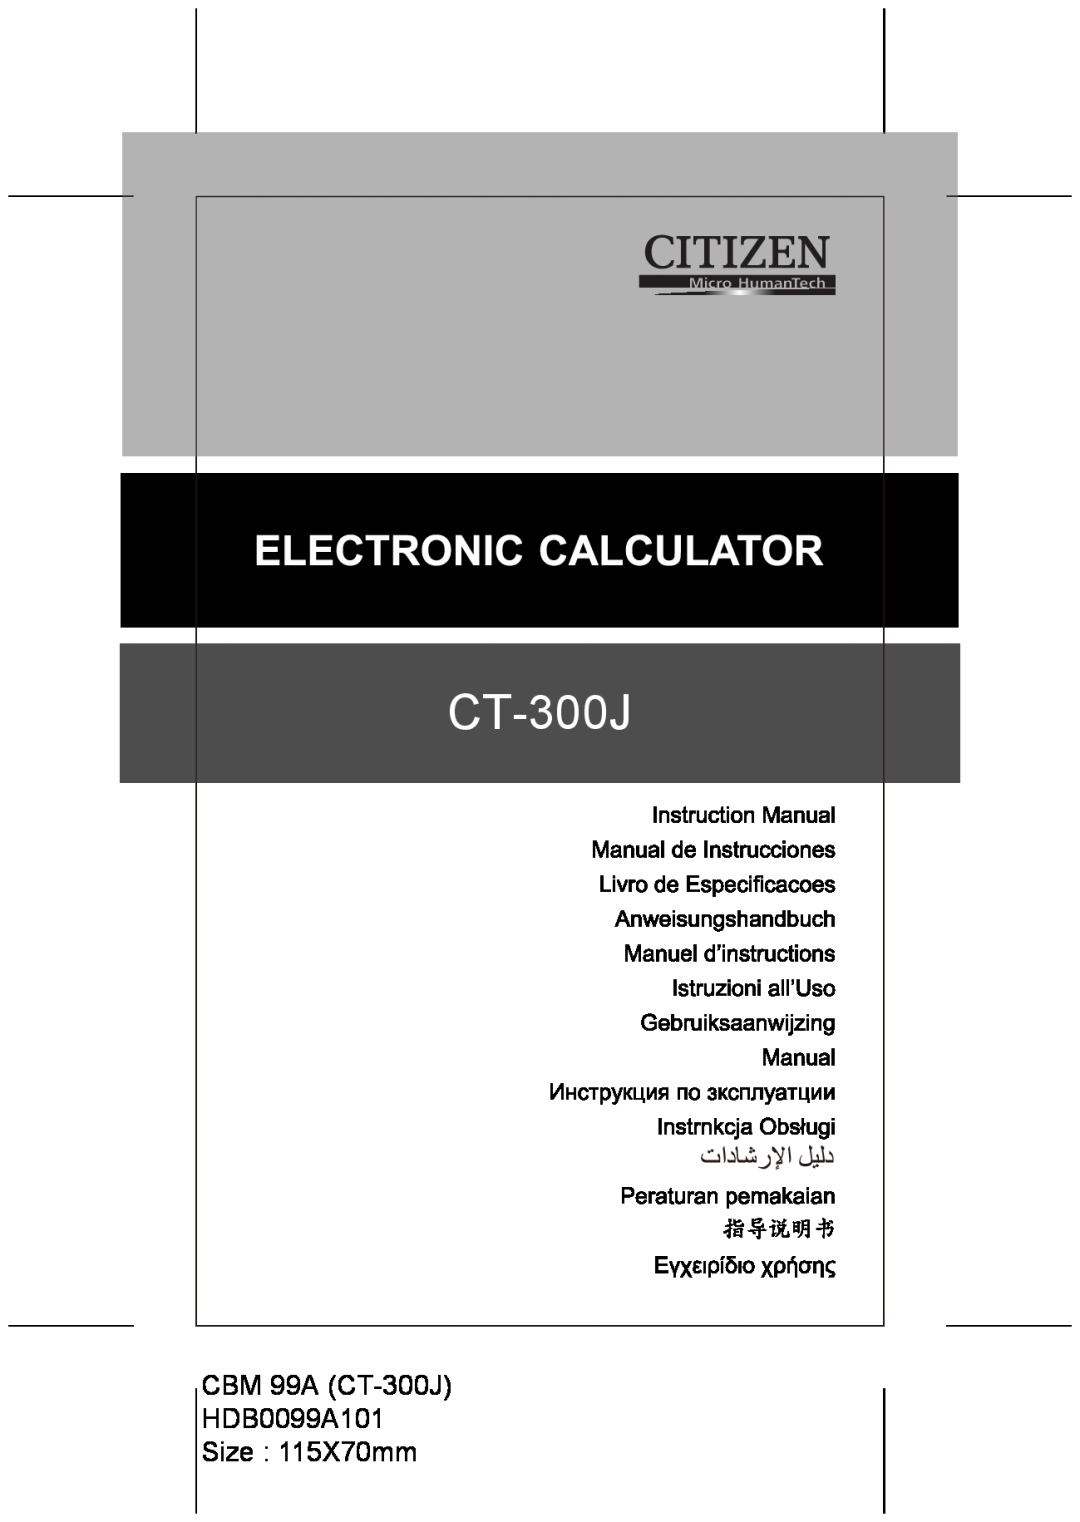 Citizen manual CBM 99A CT-300J HDB0099A101 Size 115X70mm 